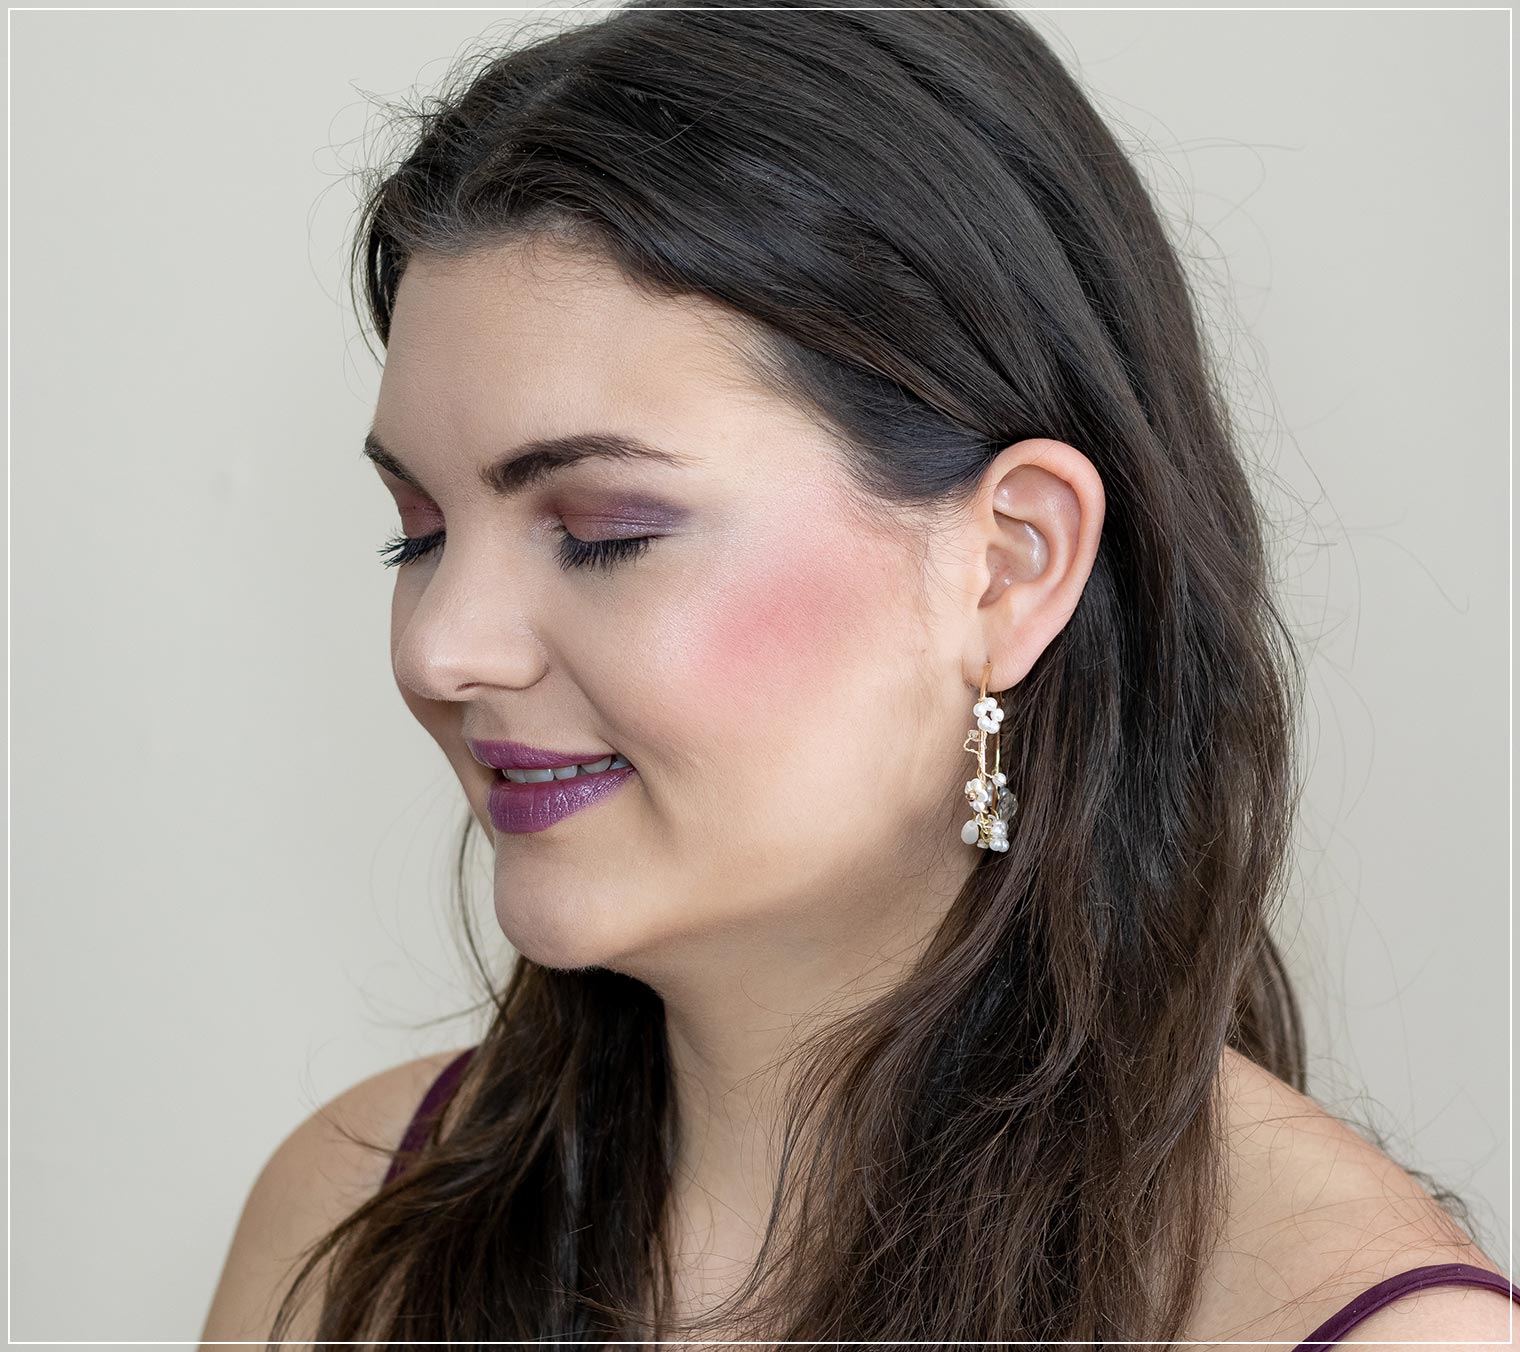 Rosafarbenes Make-Up für den Spätsommer mit der Too Faced Xmas in London Palette